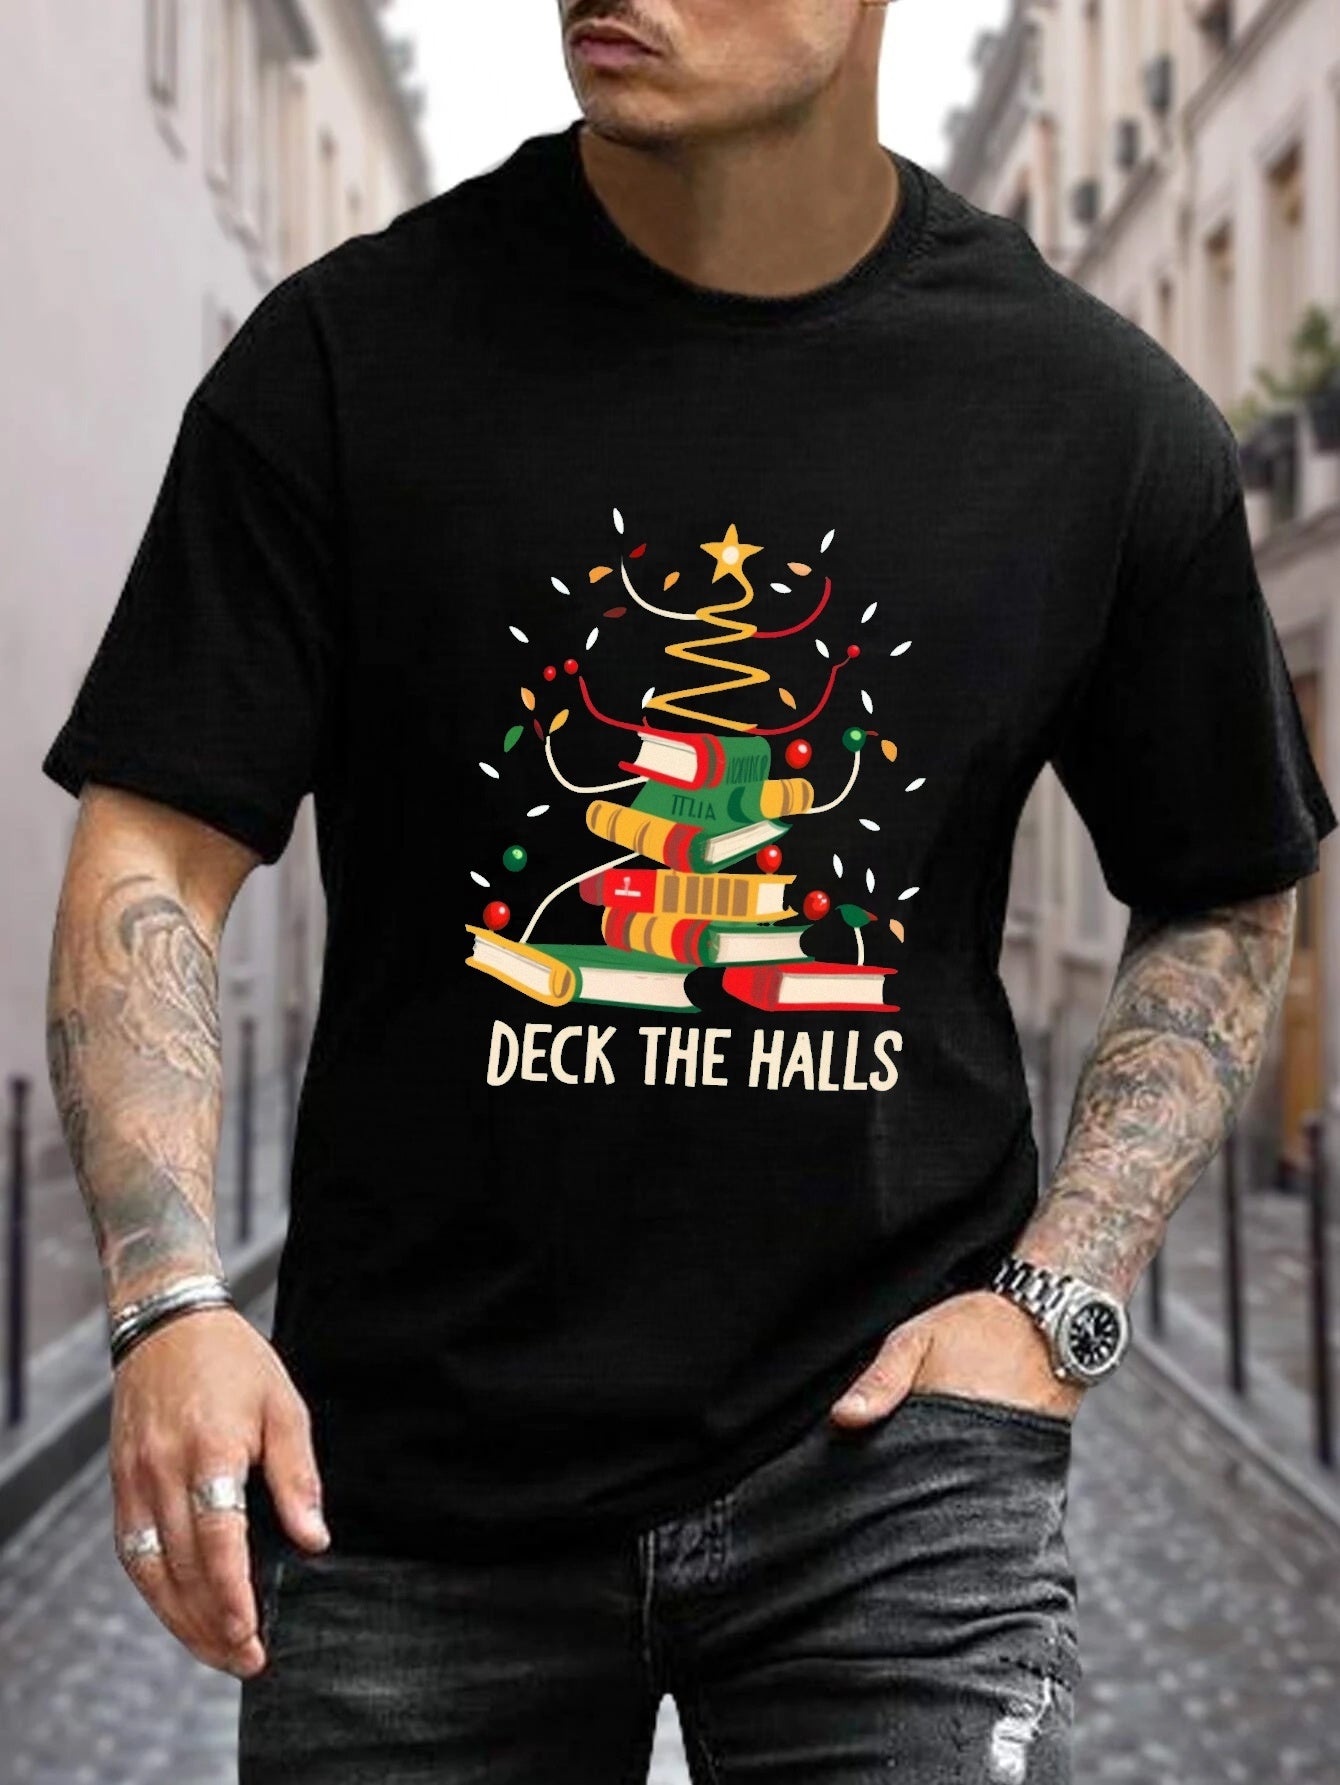 Men's Bookmas T-Shirt - "Deck the Halls"